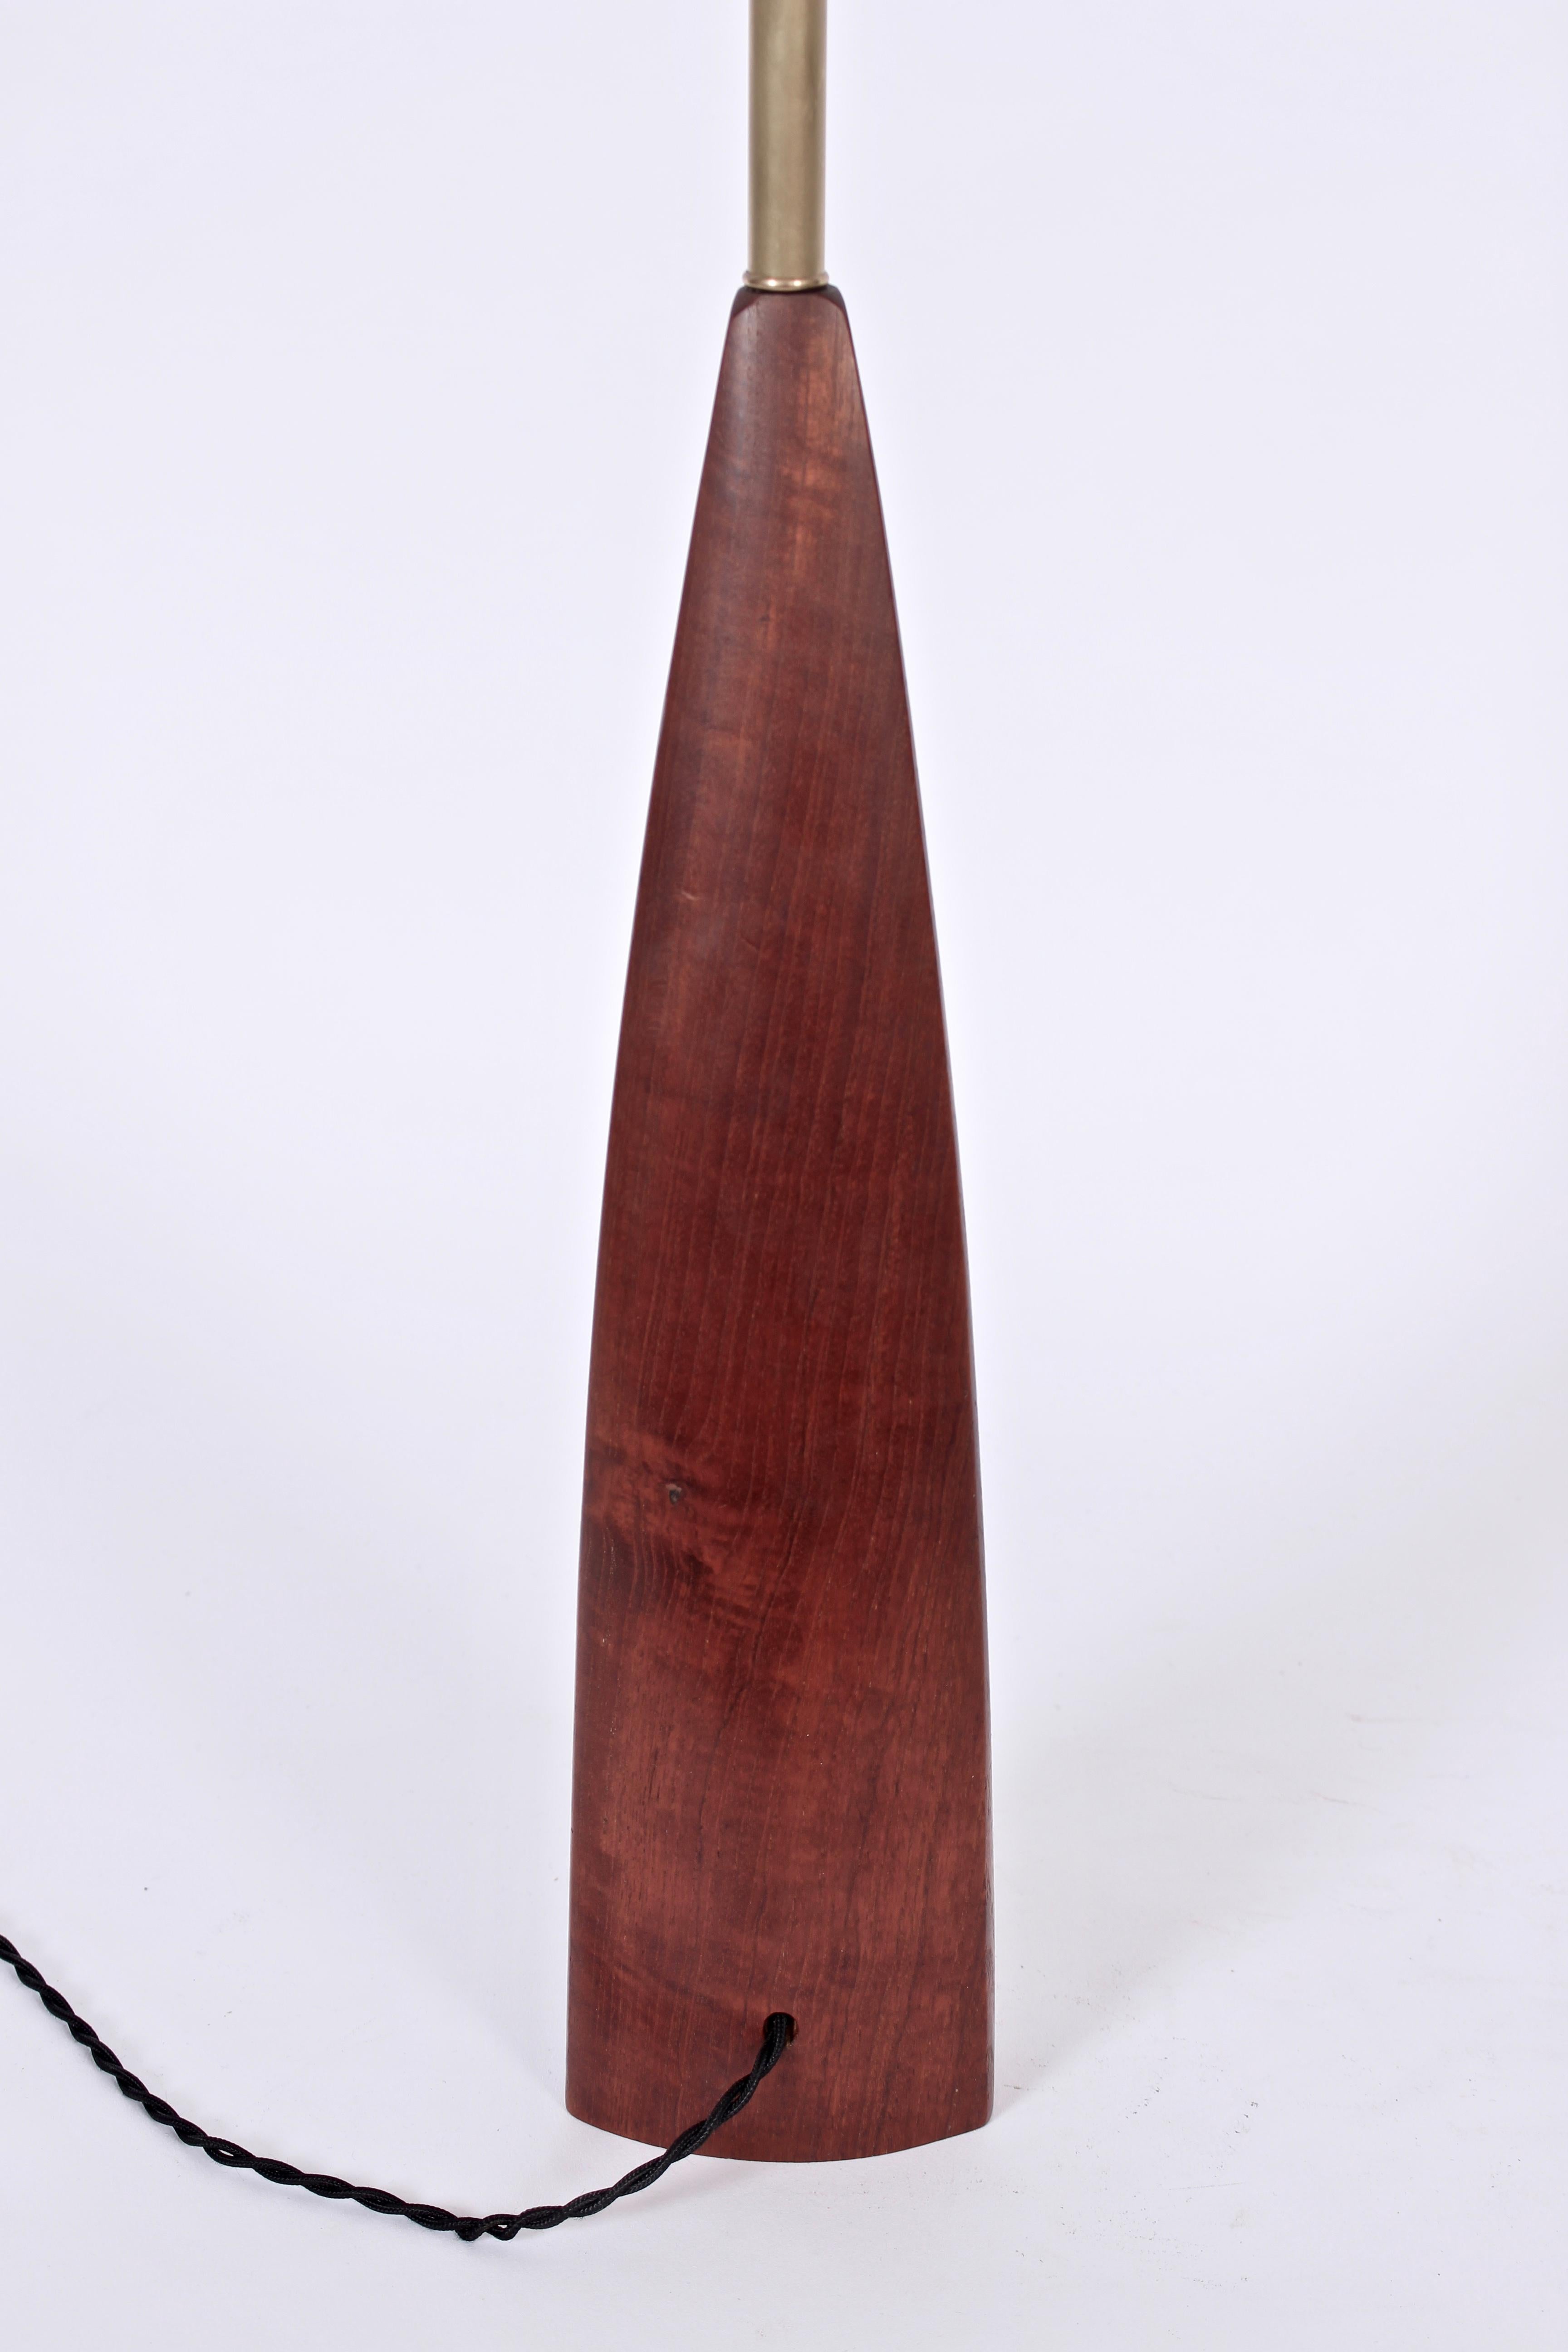 Tall Ernst Henriksen Denmark Turned Teak and Brass Table Lamp, 1960's In Good Condition For Sale In Bainbridge, NY